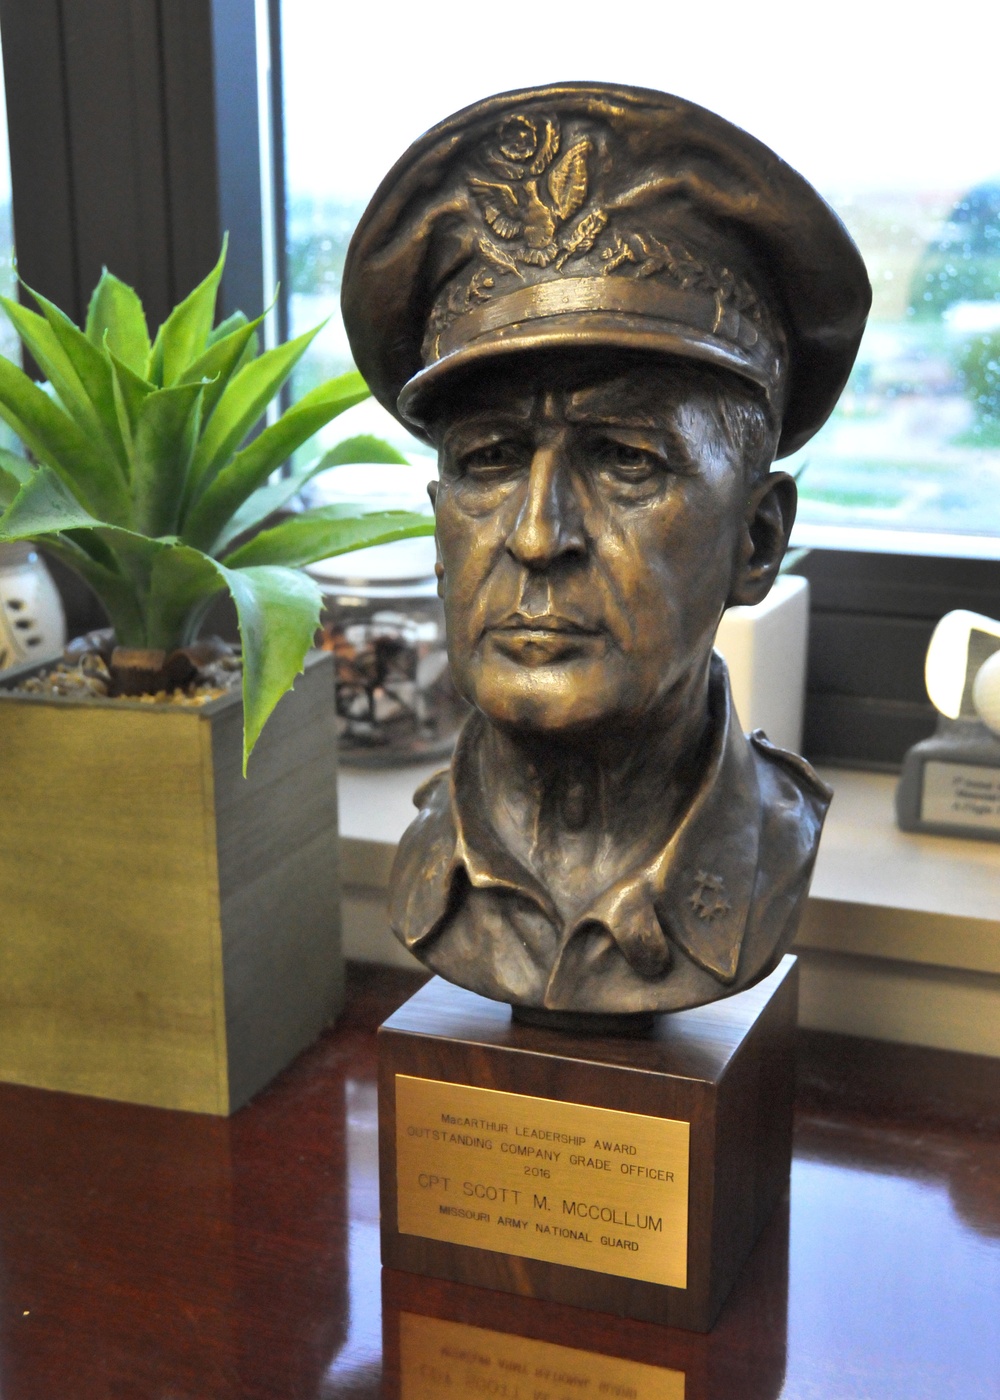 Missouri Army Guardsman receives Gen. MacArthur Leadership Award